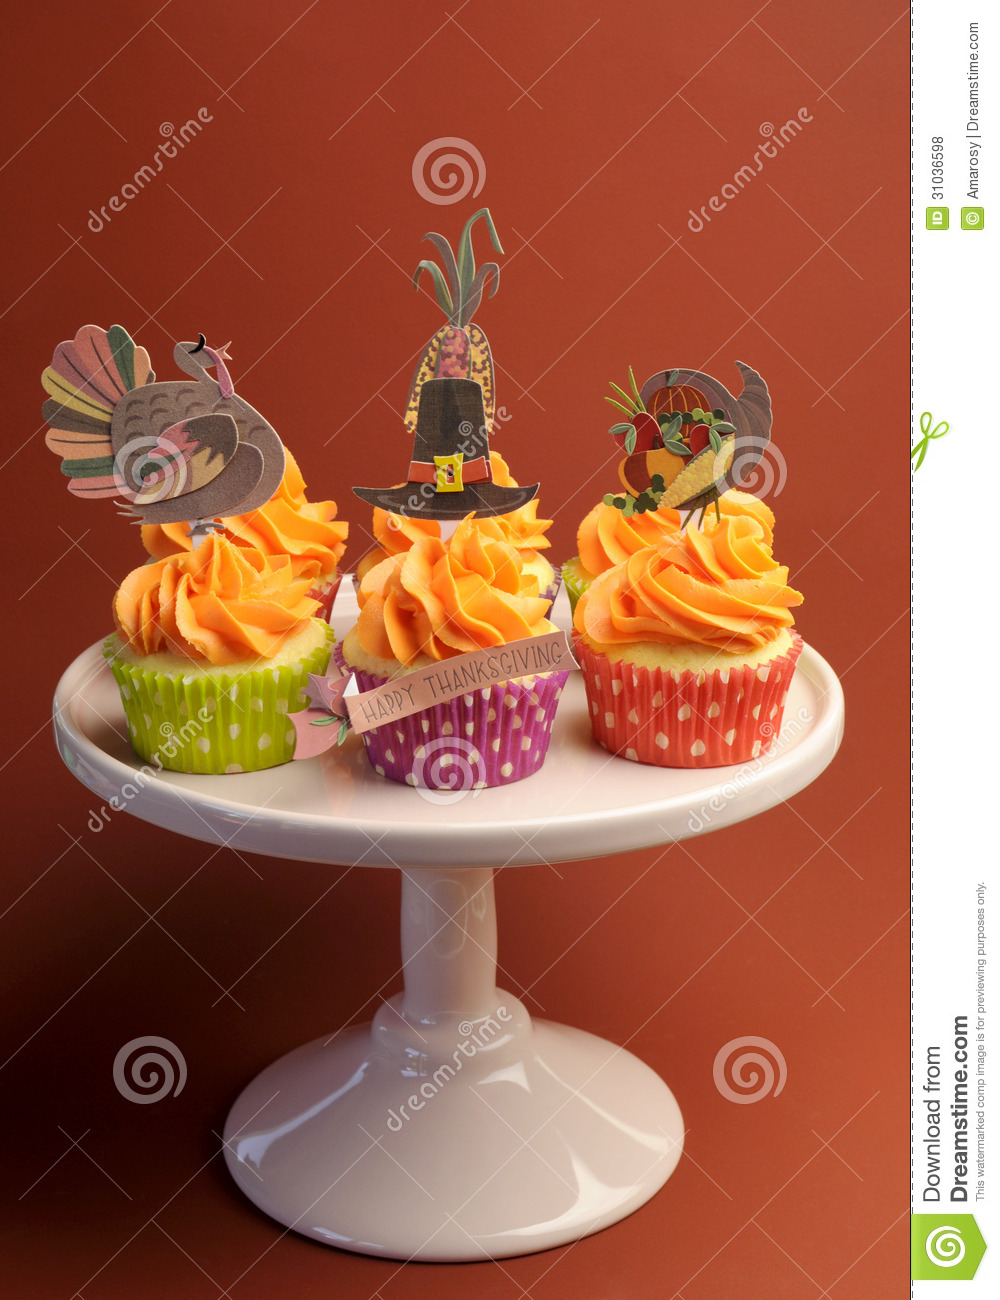 Pin Clipart Thanksgiving Clip Artfree Birthday Cake On Pinterest Cake